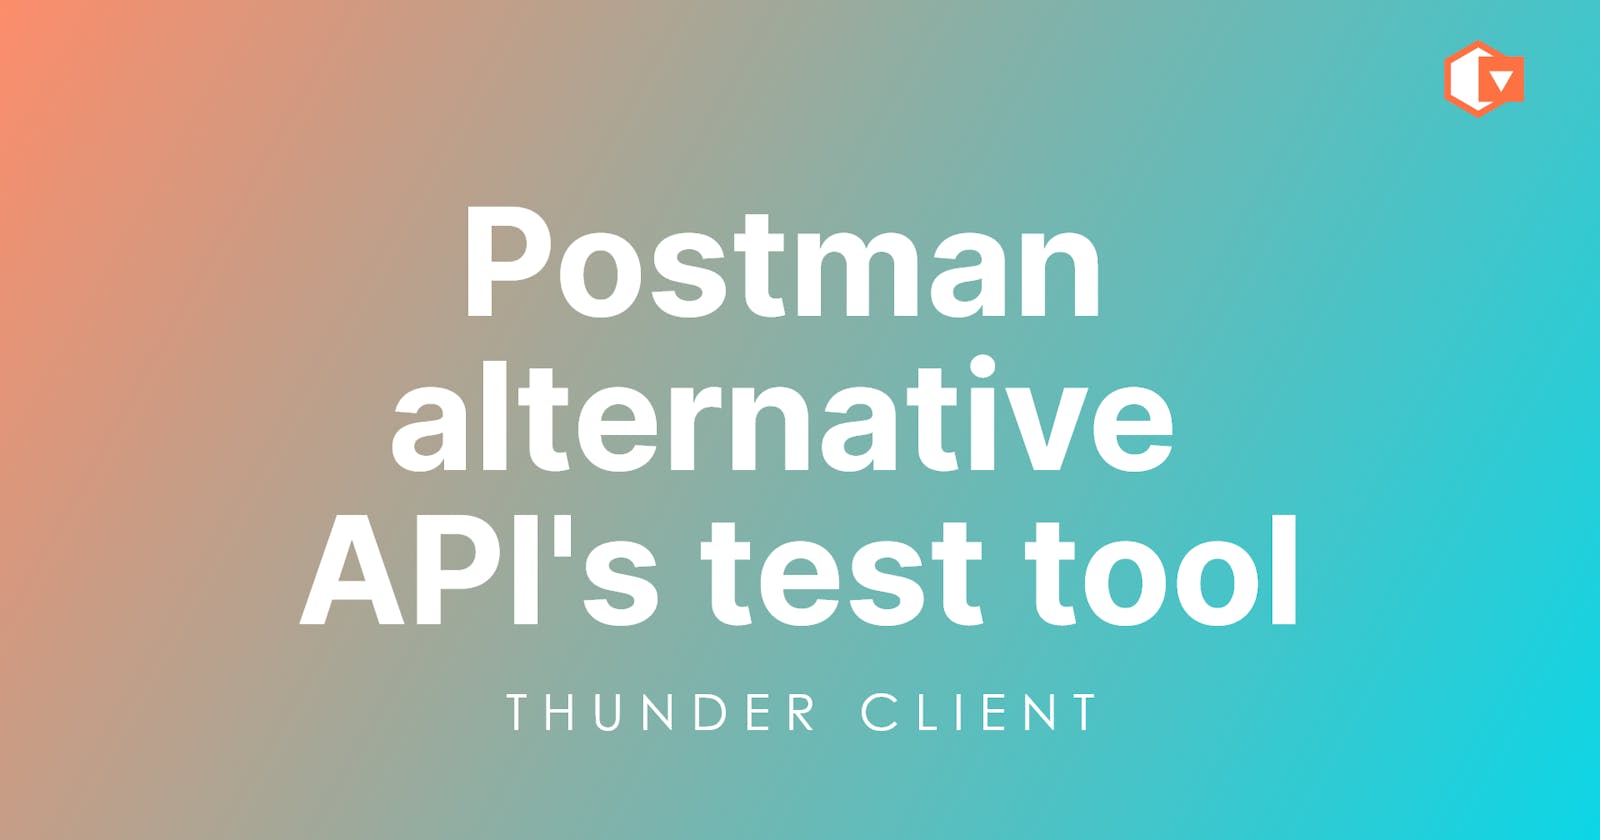 Postman alternative API's test tool.